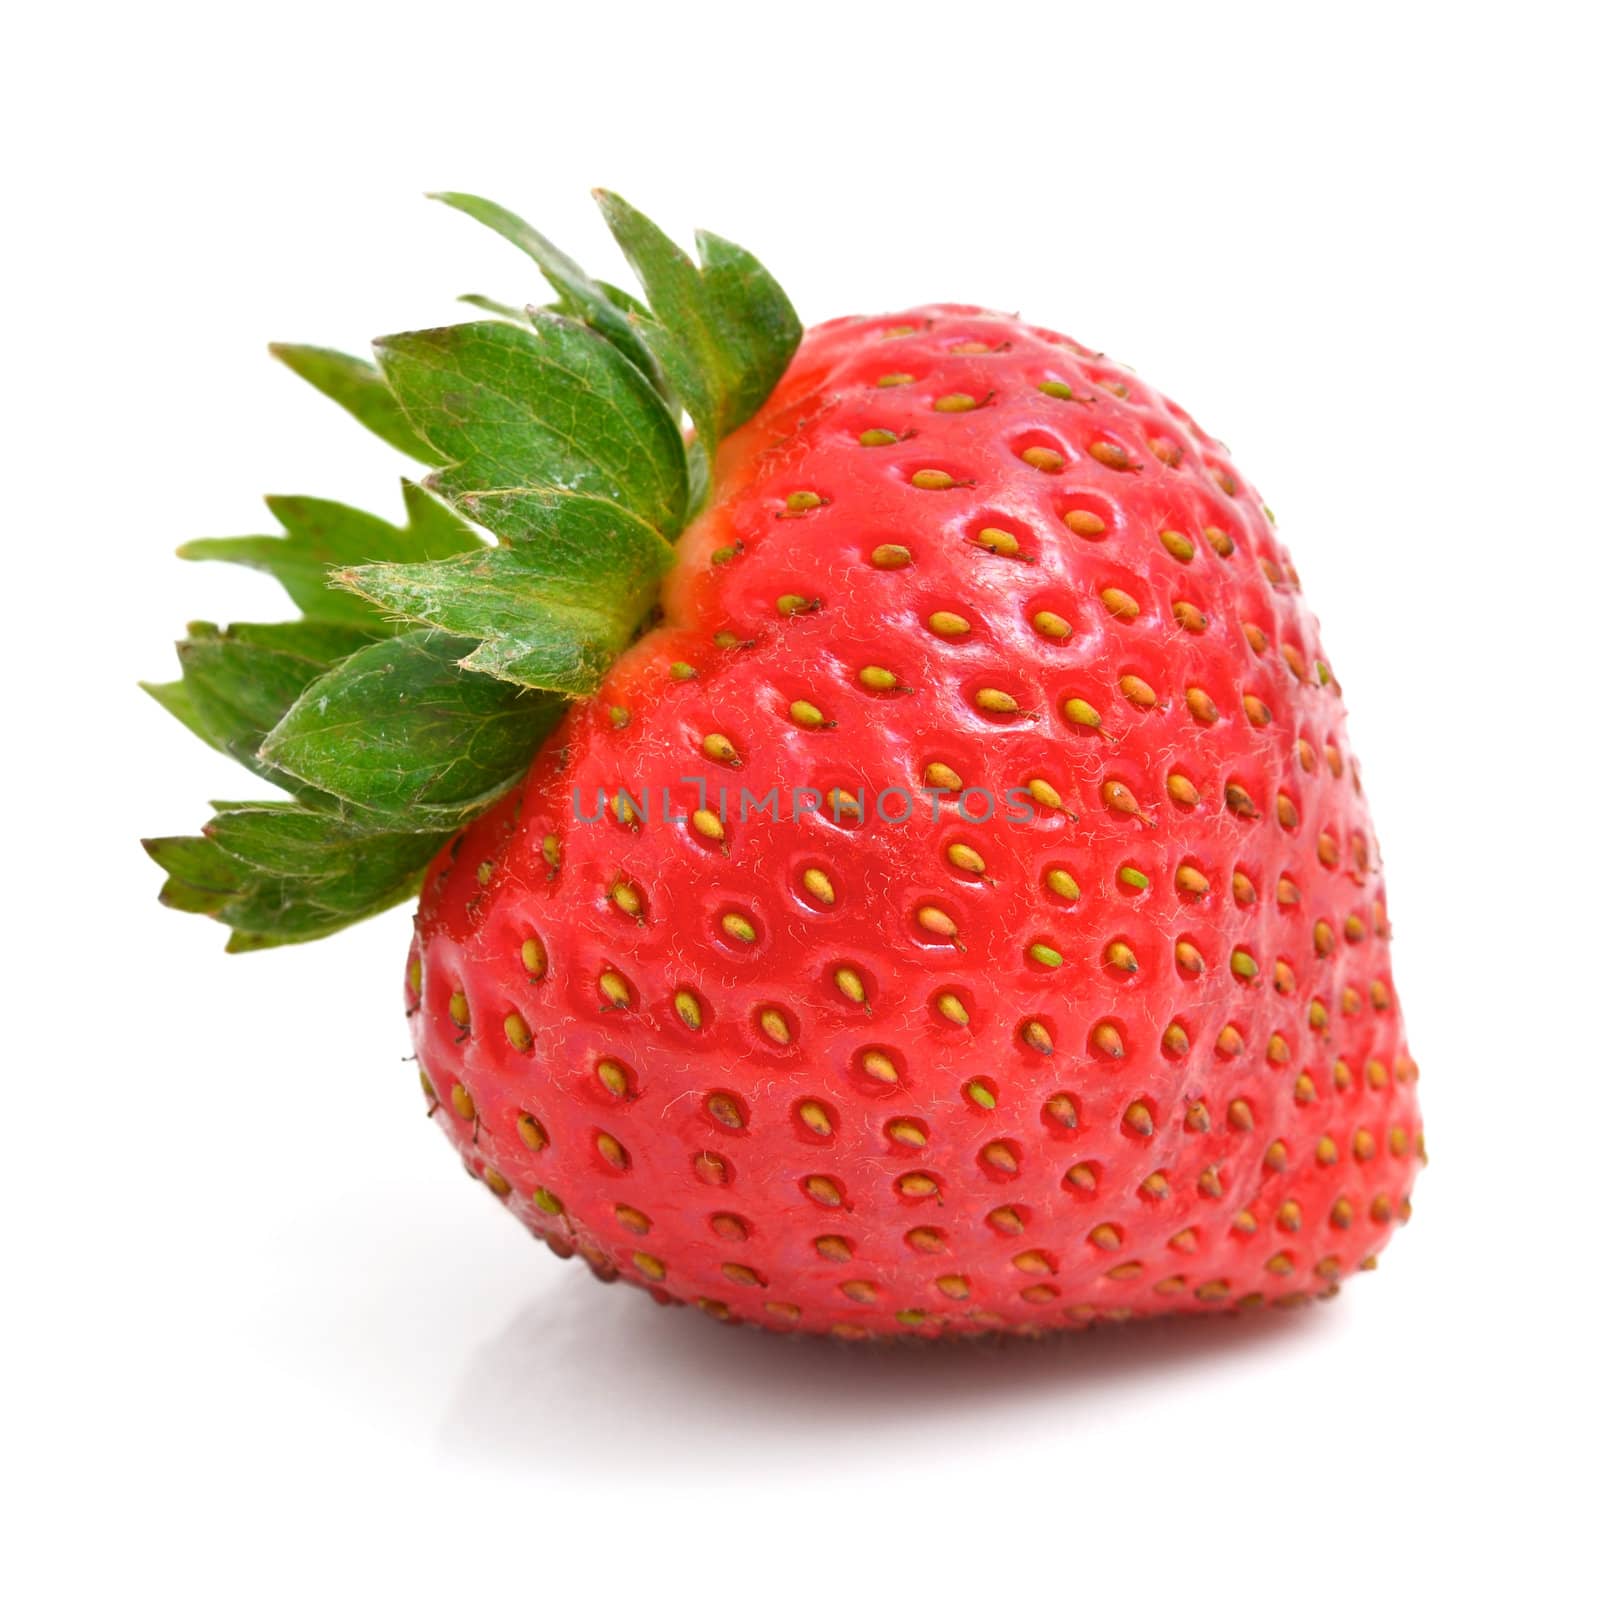 Strawberry by antpkr